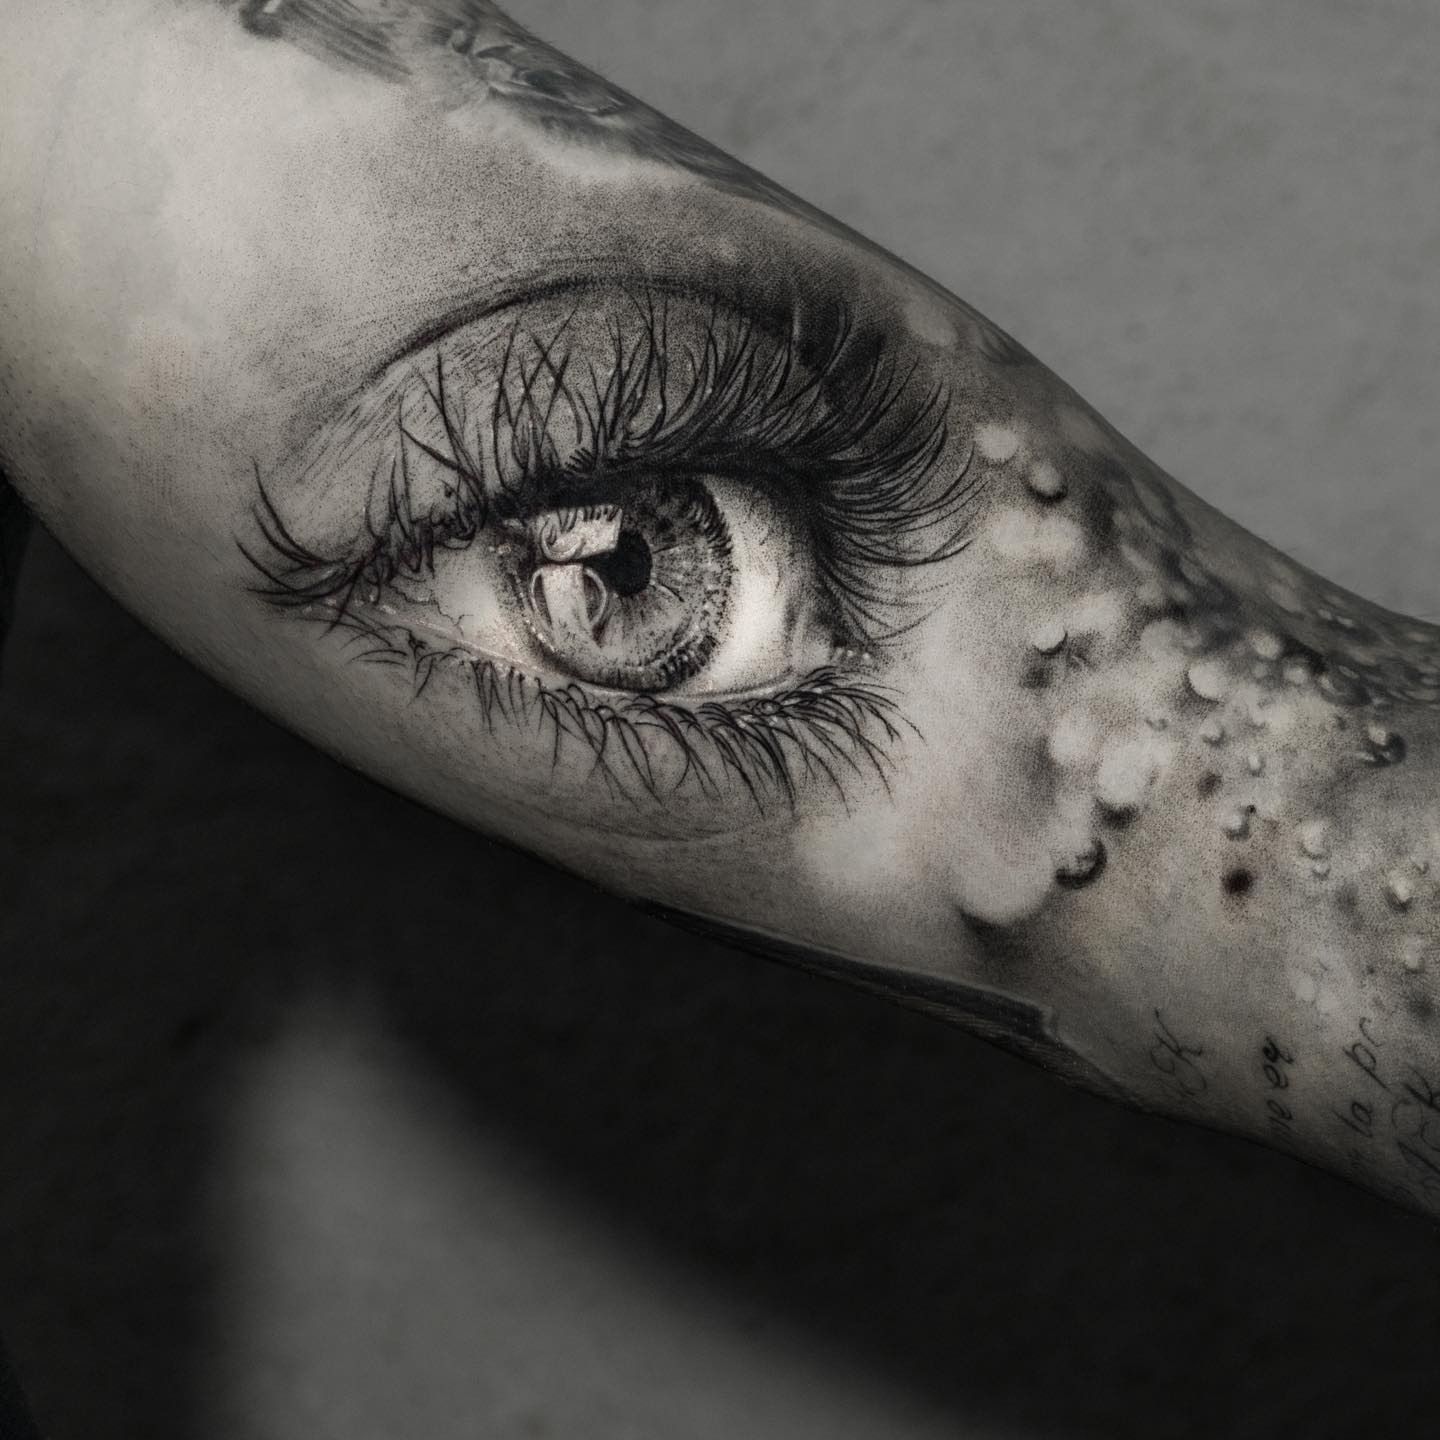 Tattoo Design (Realism) by gpreece on DeviantArt